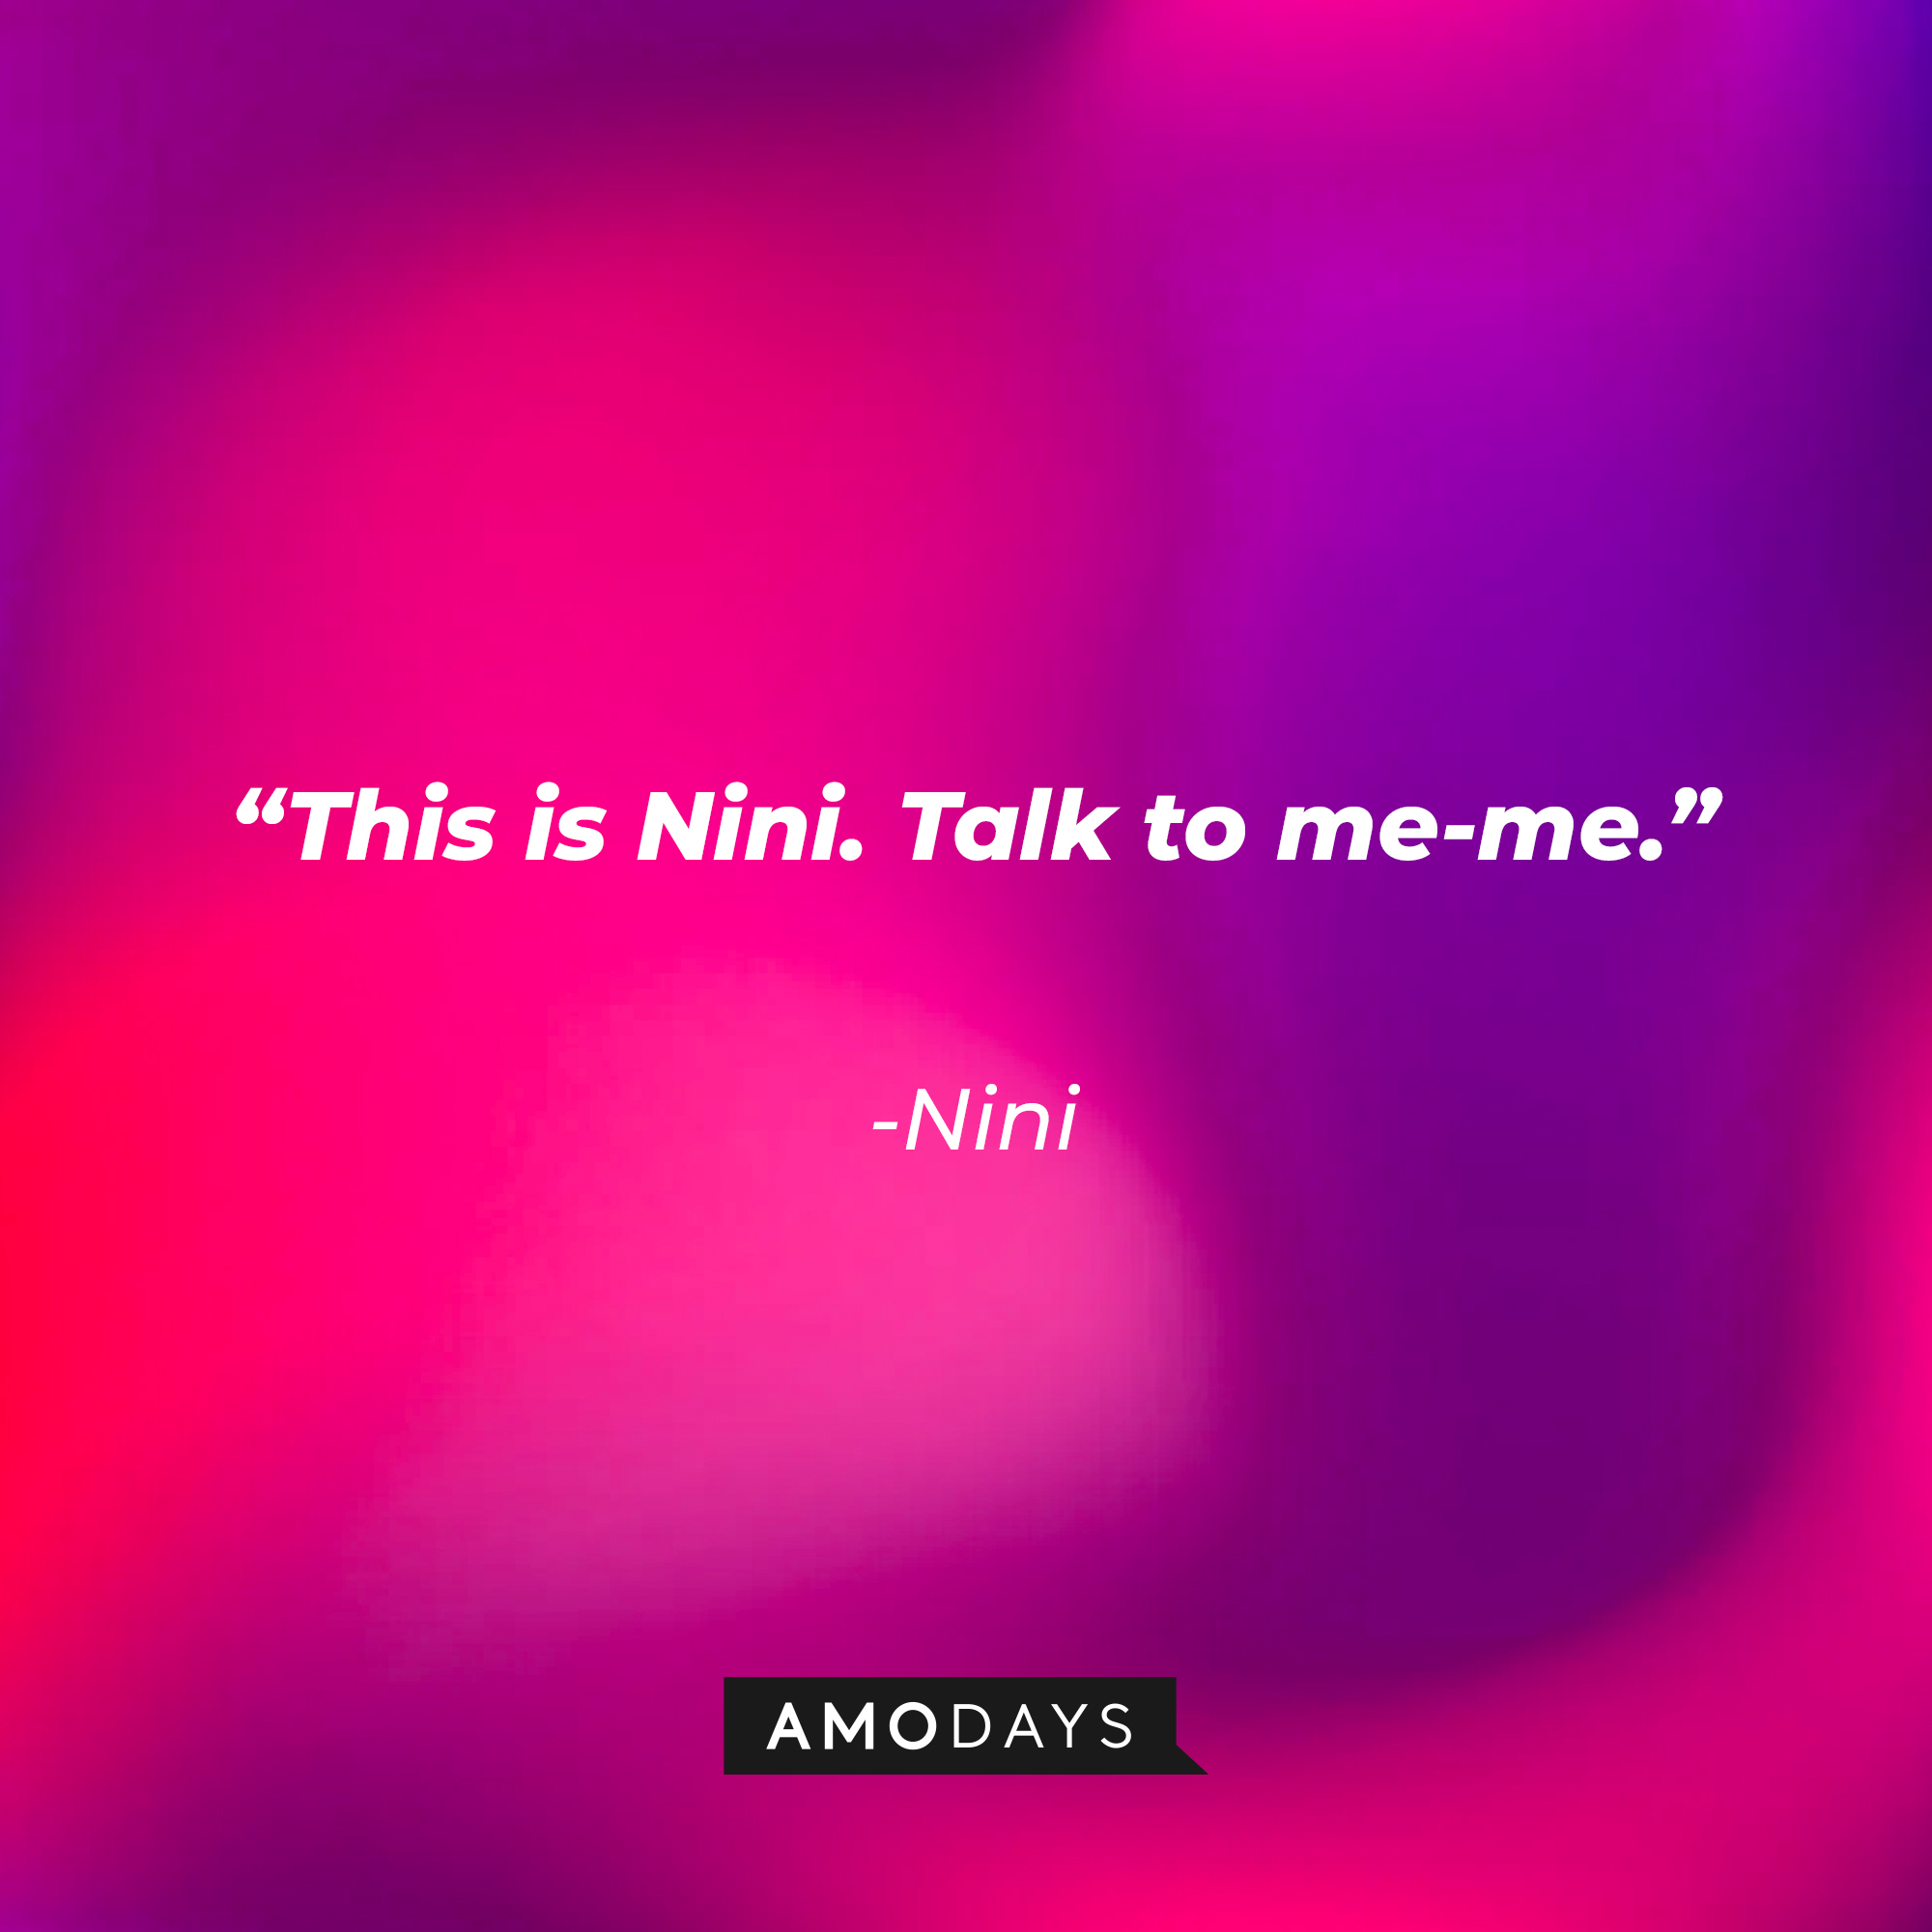 Nini’s quote: "This is Nini. Talk to me-me." | Source: AmoDays